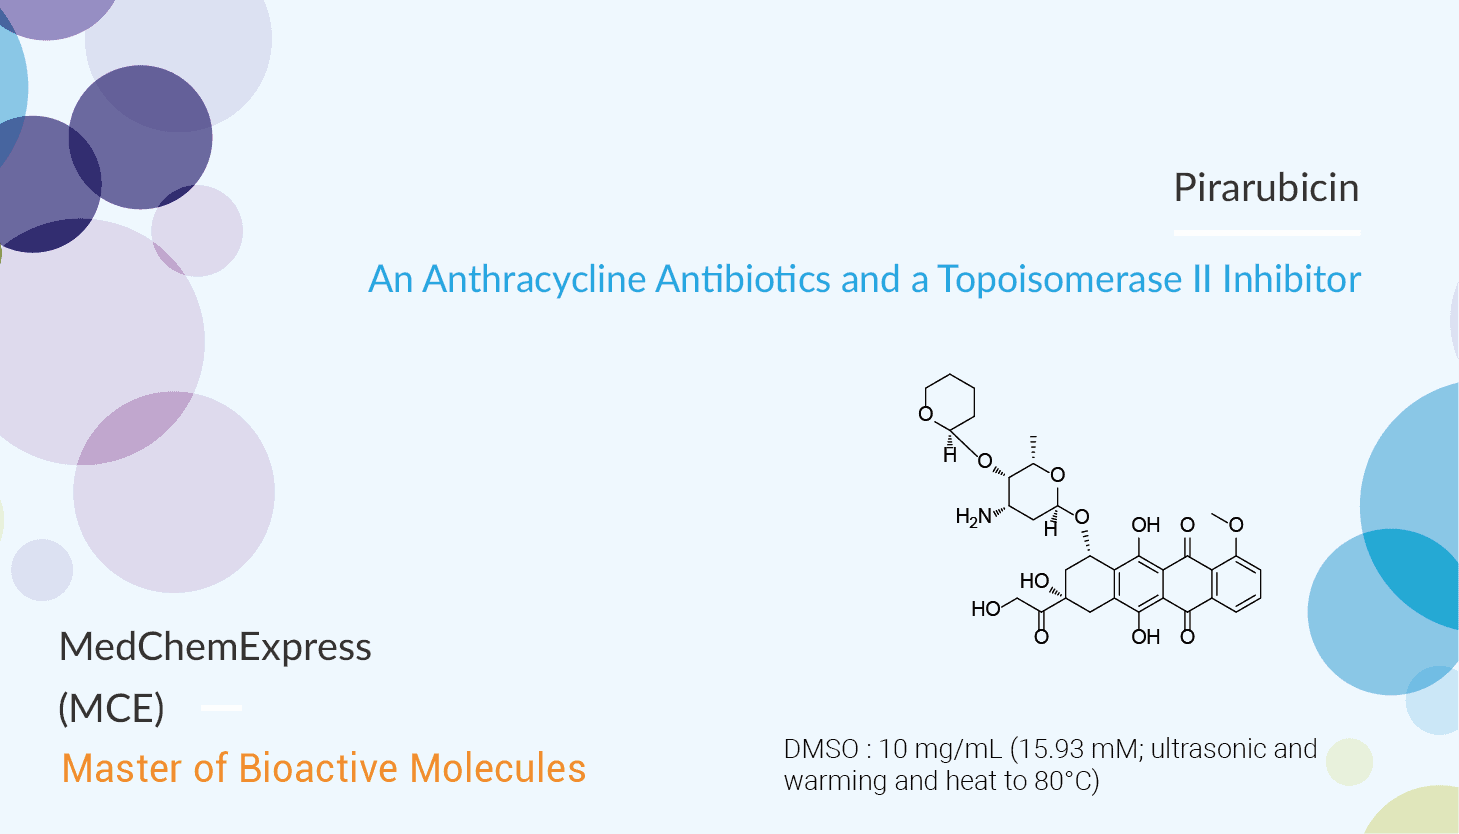 Pirarubicin - Pirarubicin, an Anthracycline Antibiotics, Acts as a Topoisomerase II Inhibitor